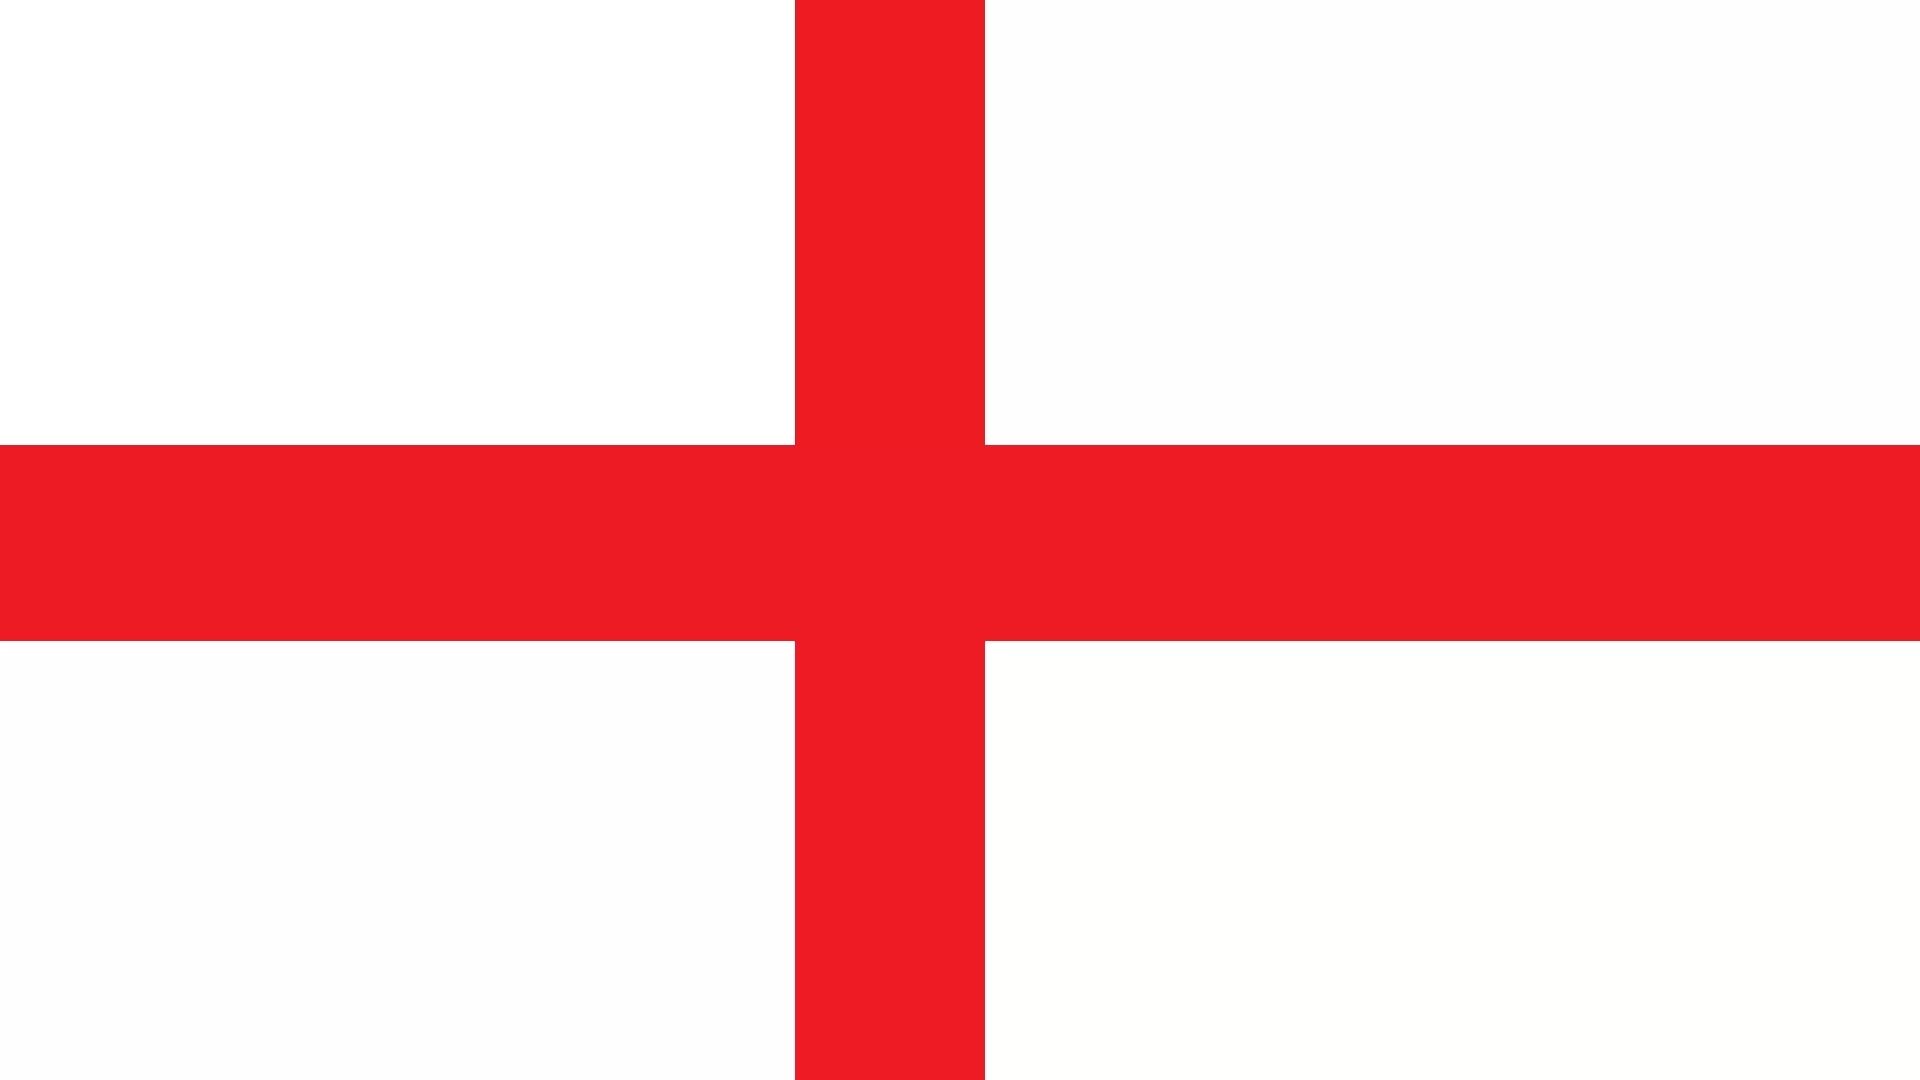 Флаг Святого Георгия Англия. Флаг Англии крест Святого Георгия. Флаг Англии красный крест. Красный флаг с белым крестом.